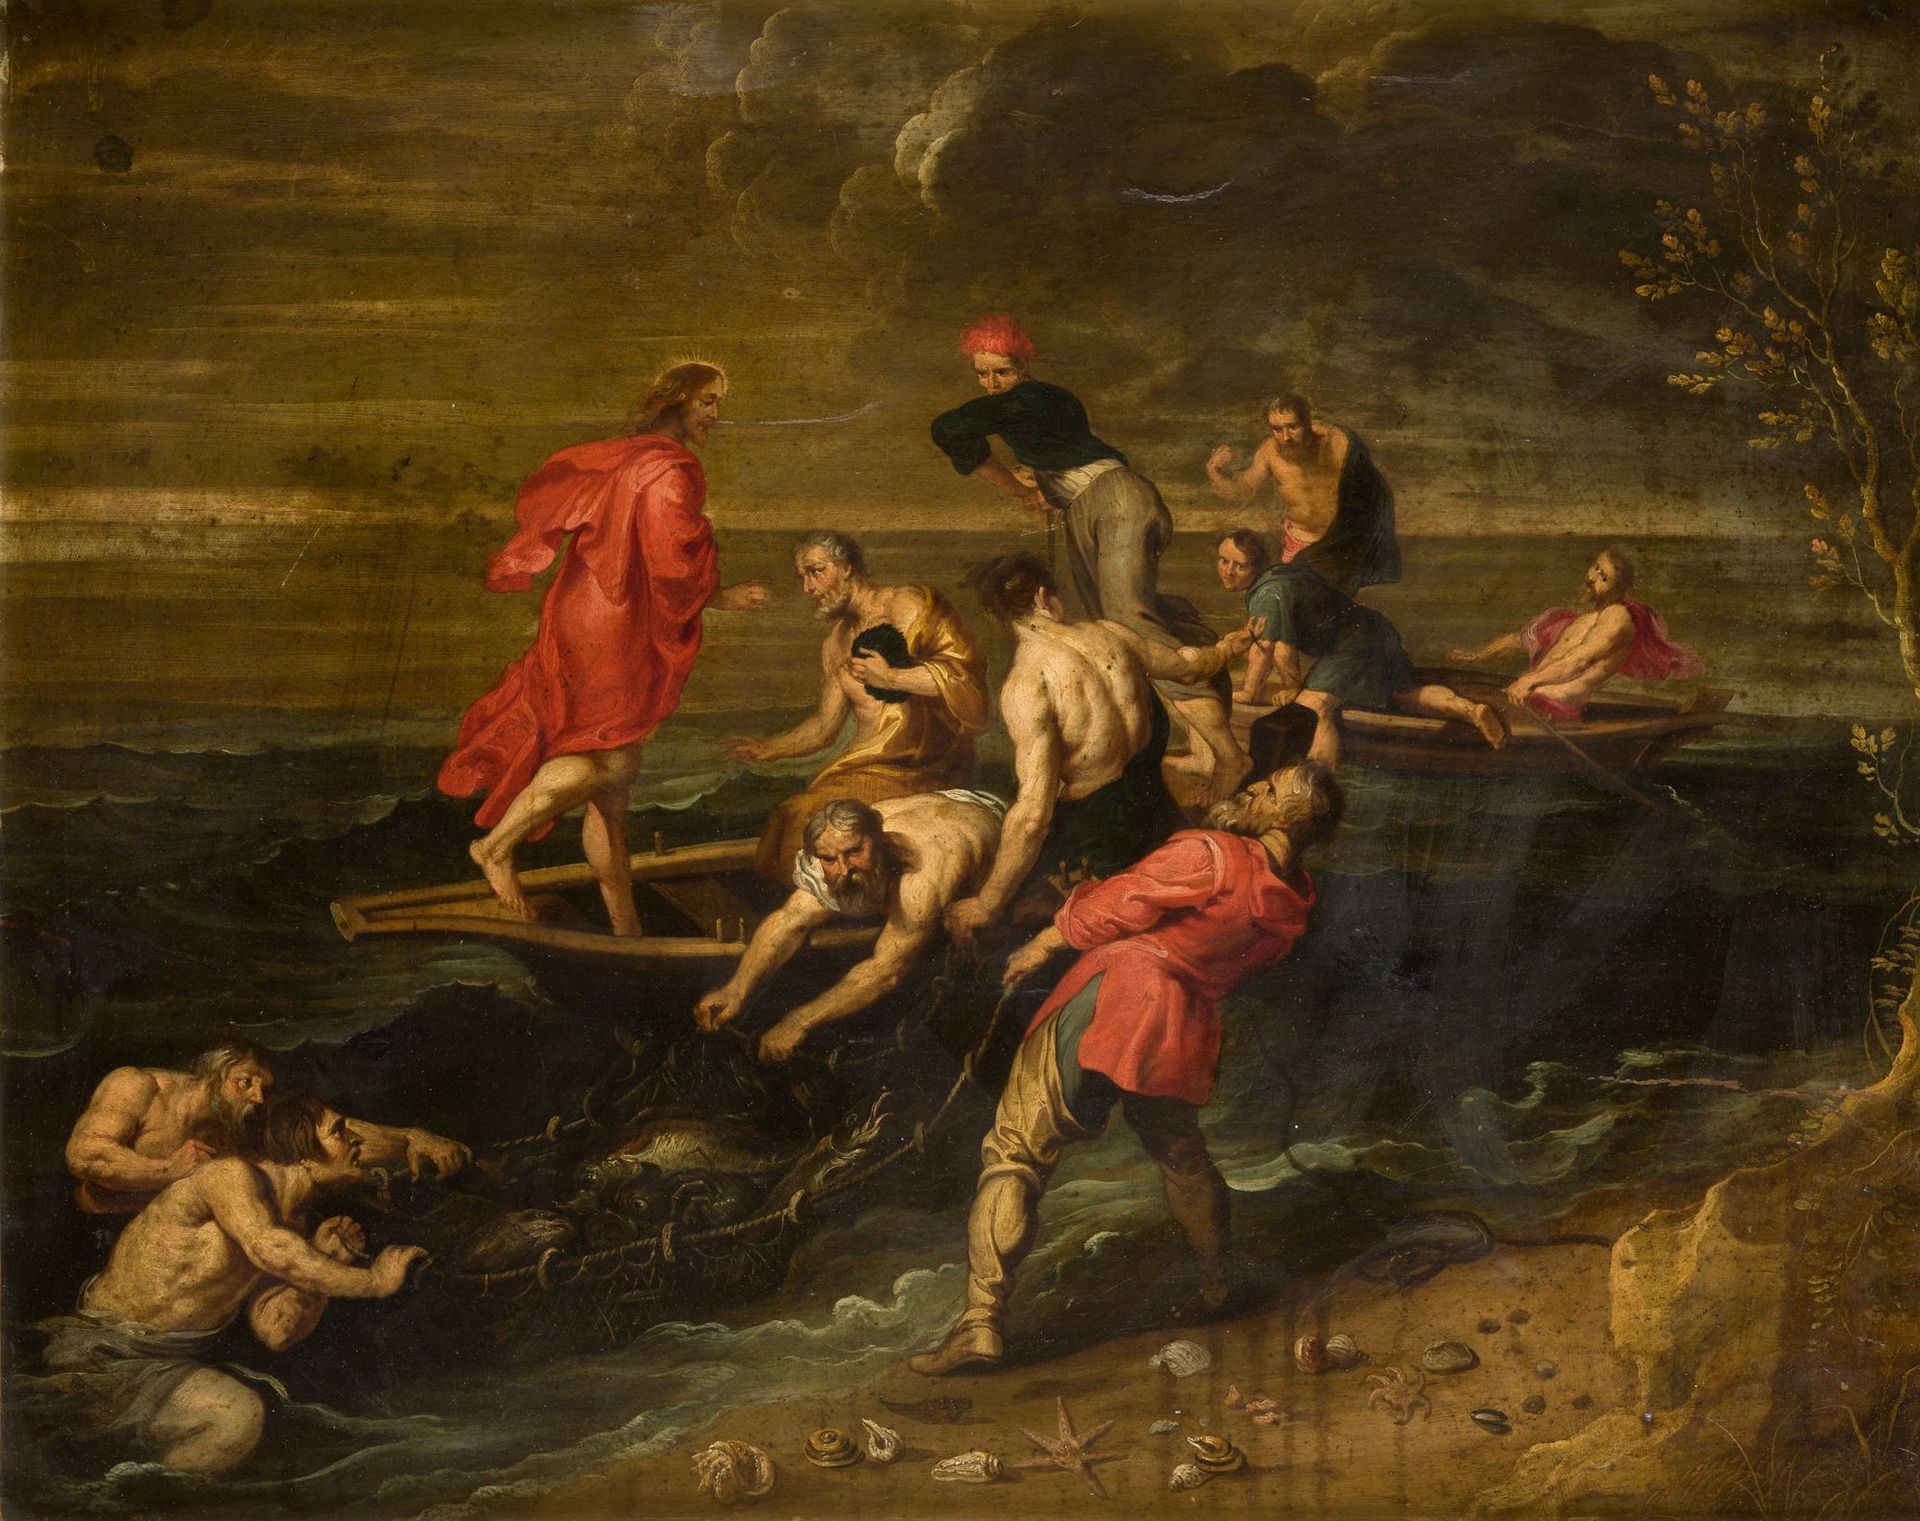 CIRCULO DE RUBENS (C. 17th / ?) "The miraculous catch" Öl auf Kupfer. 68 x 85 cm